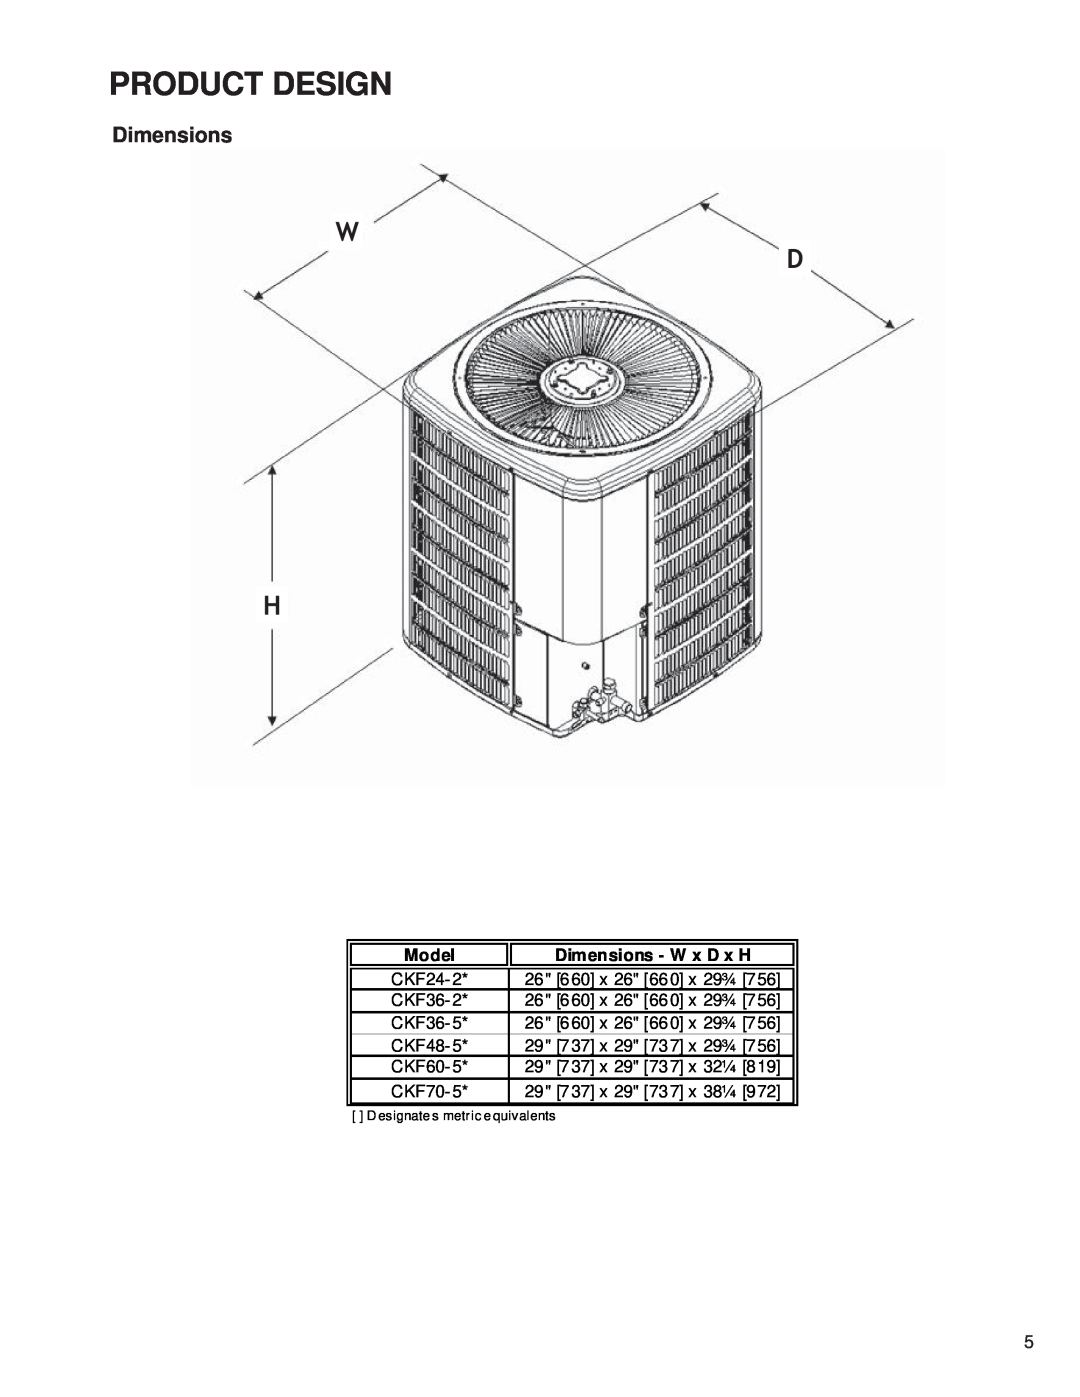 Goodman Mfg CKF50Hz, Condensing Units service manual Product Design, W D H, Model, Dimensions - W x D x H 